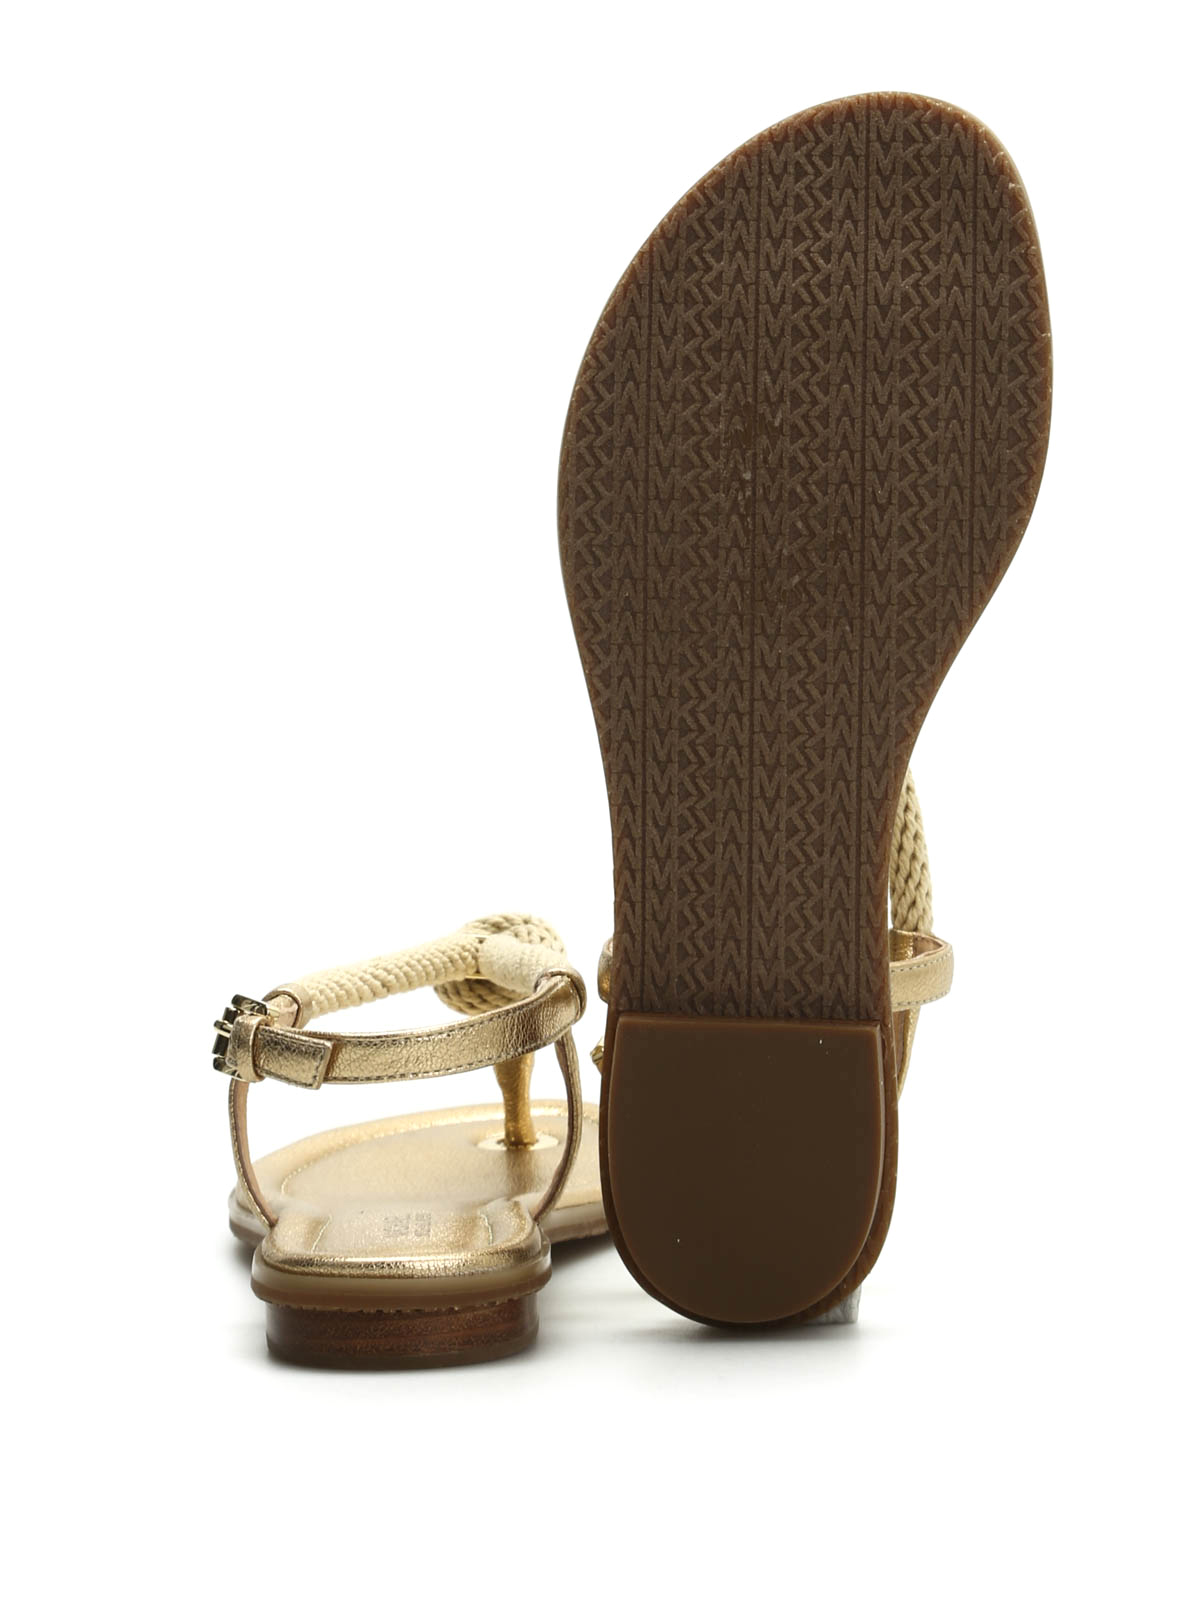 Sandals Michael Kors - Holly sandals - 40S6HOFA1M | Shop online at iKRIX